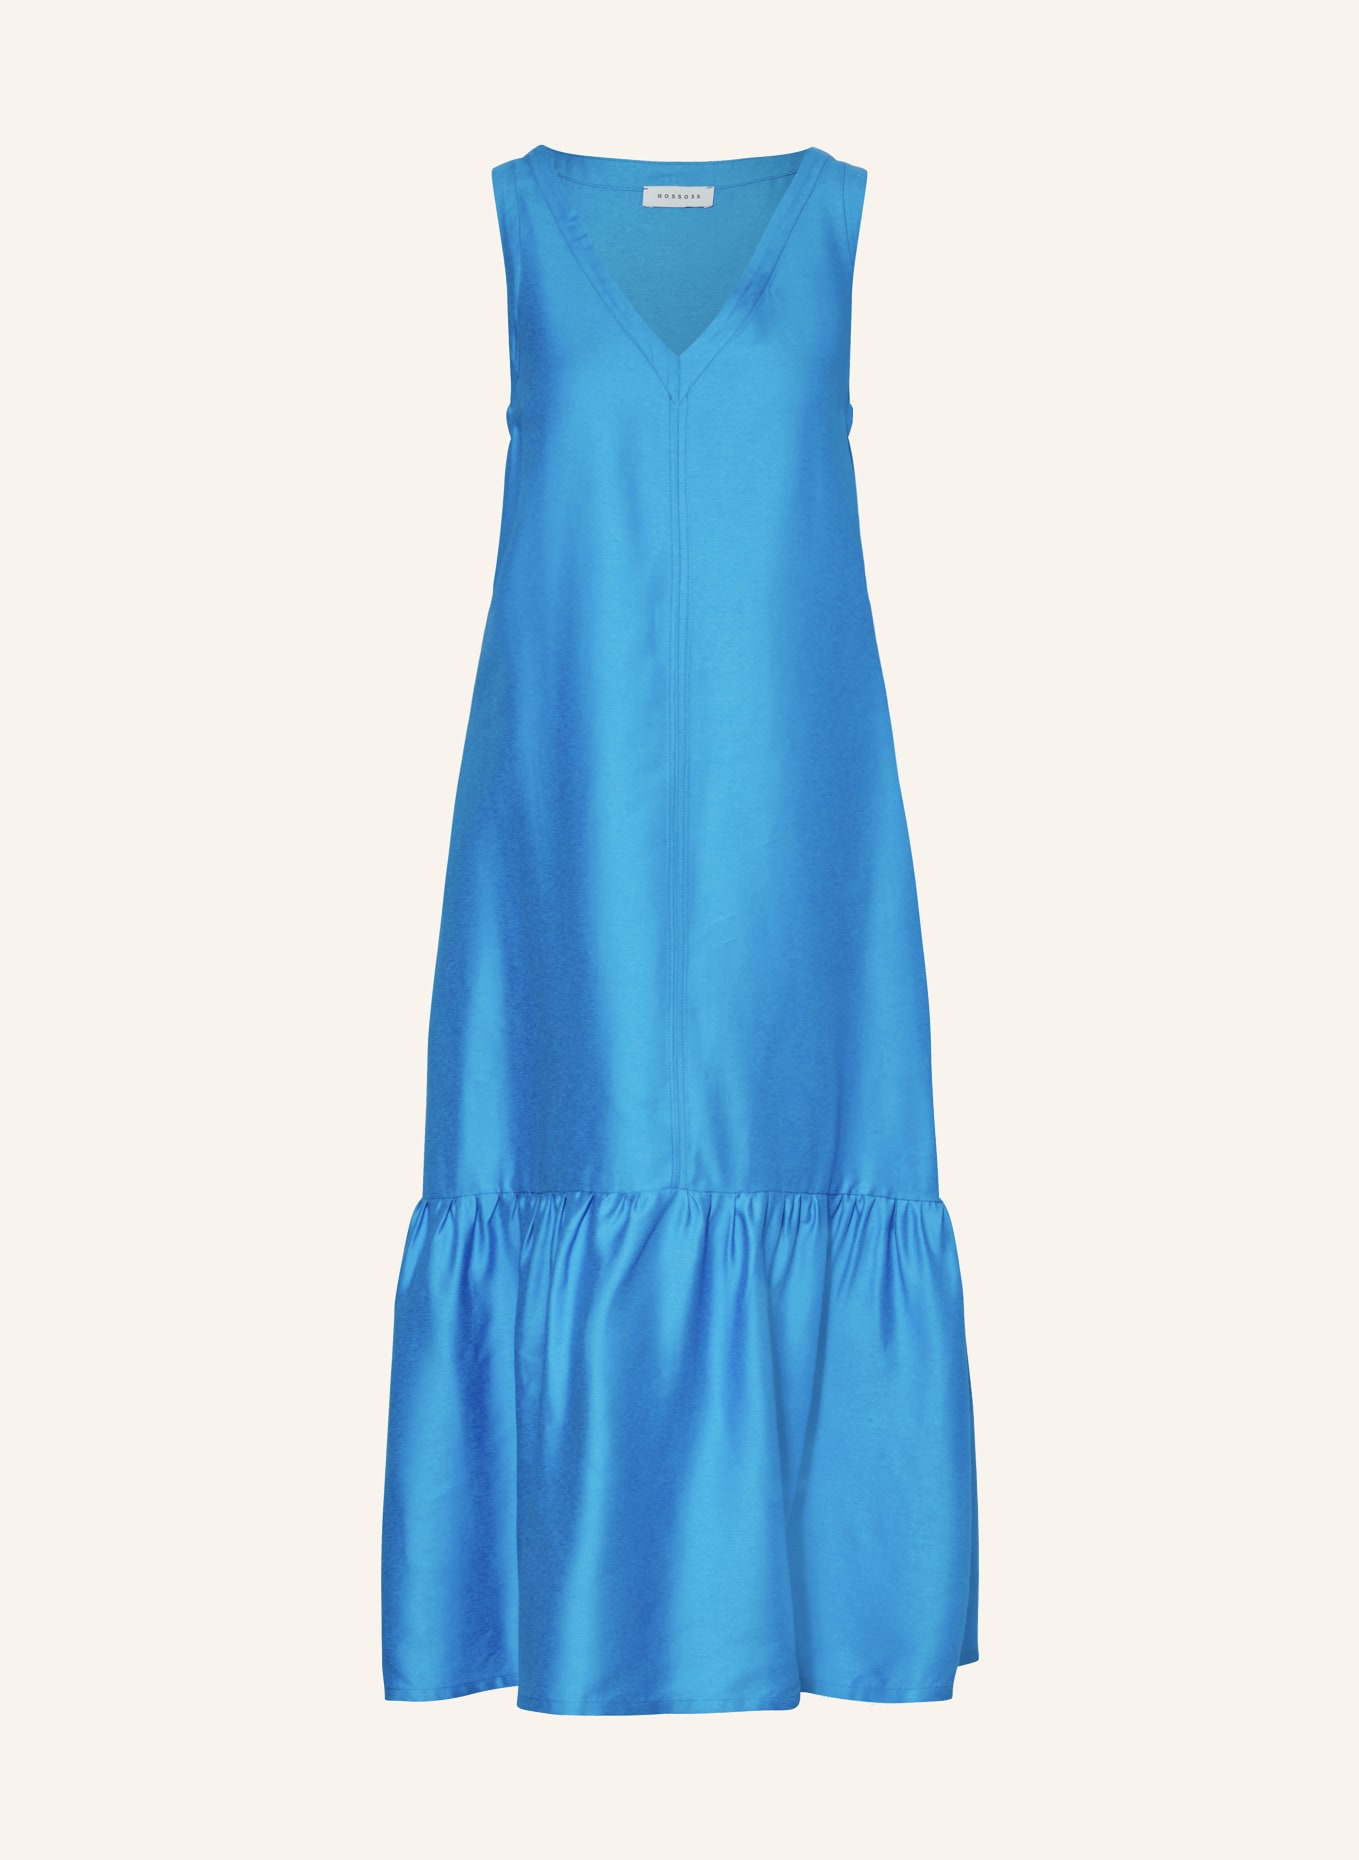 ROSSO35 Kleid, Farbe: BLAU (Bild 1)